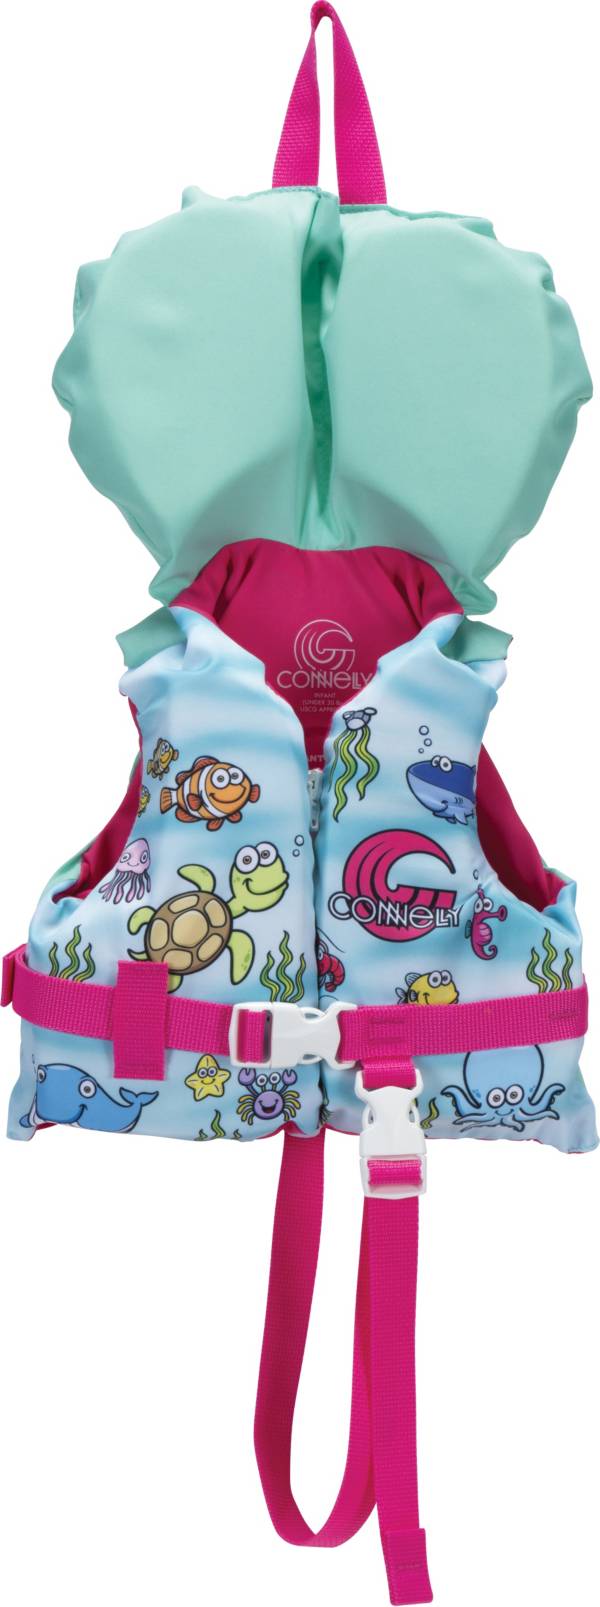 Connelly Girls' Infant Premium Nylon Life Vest product image